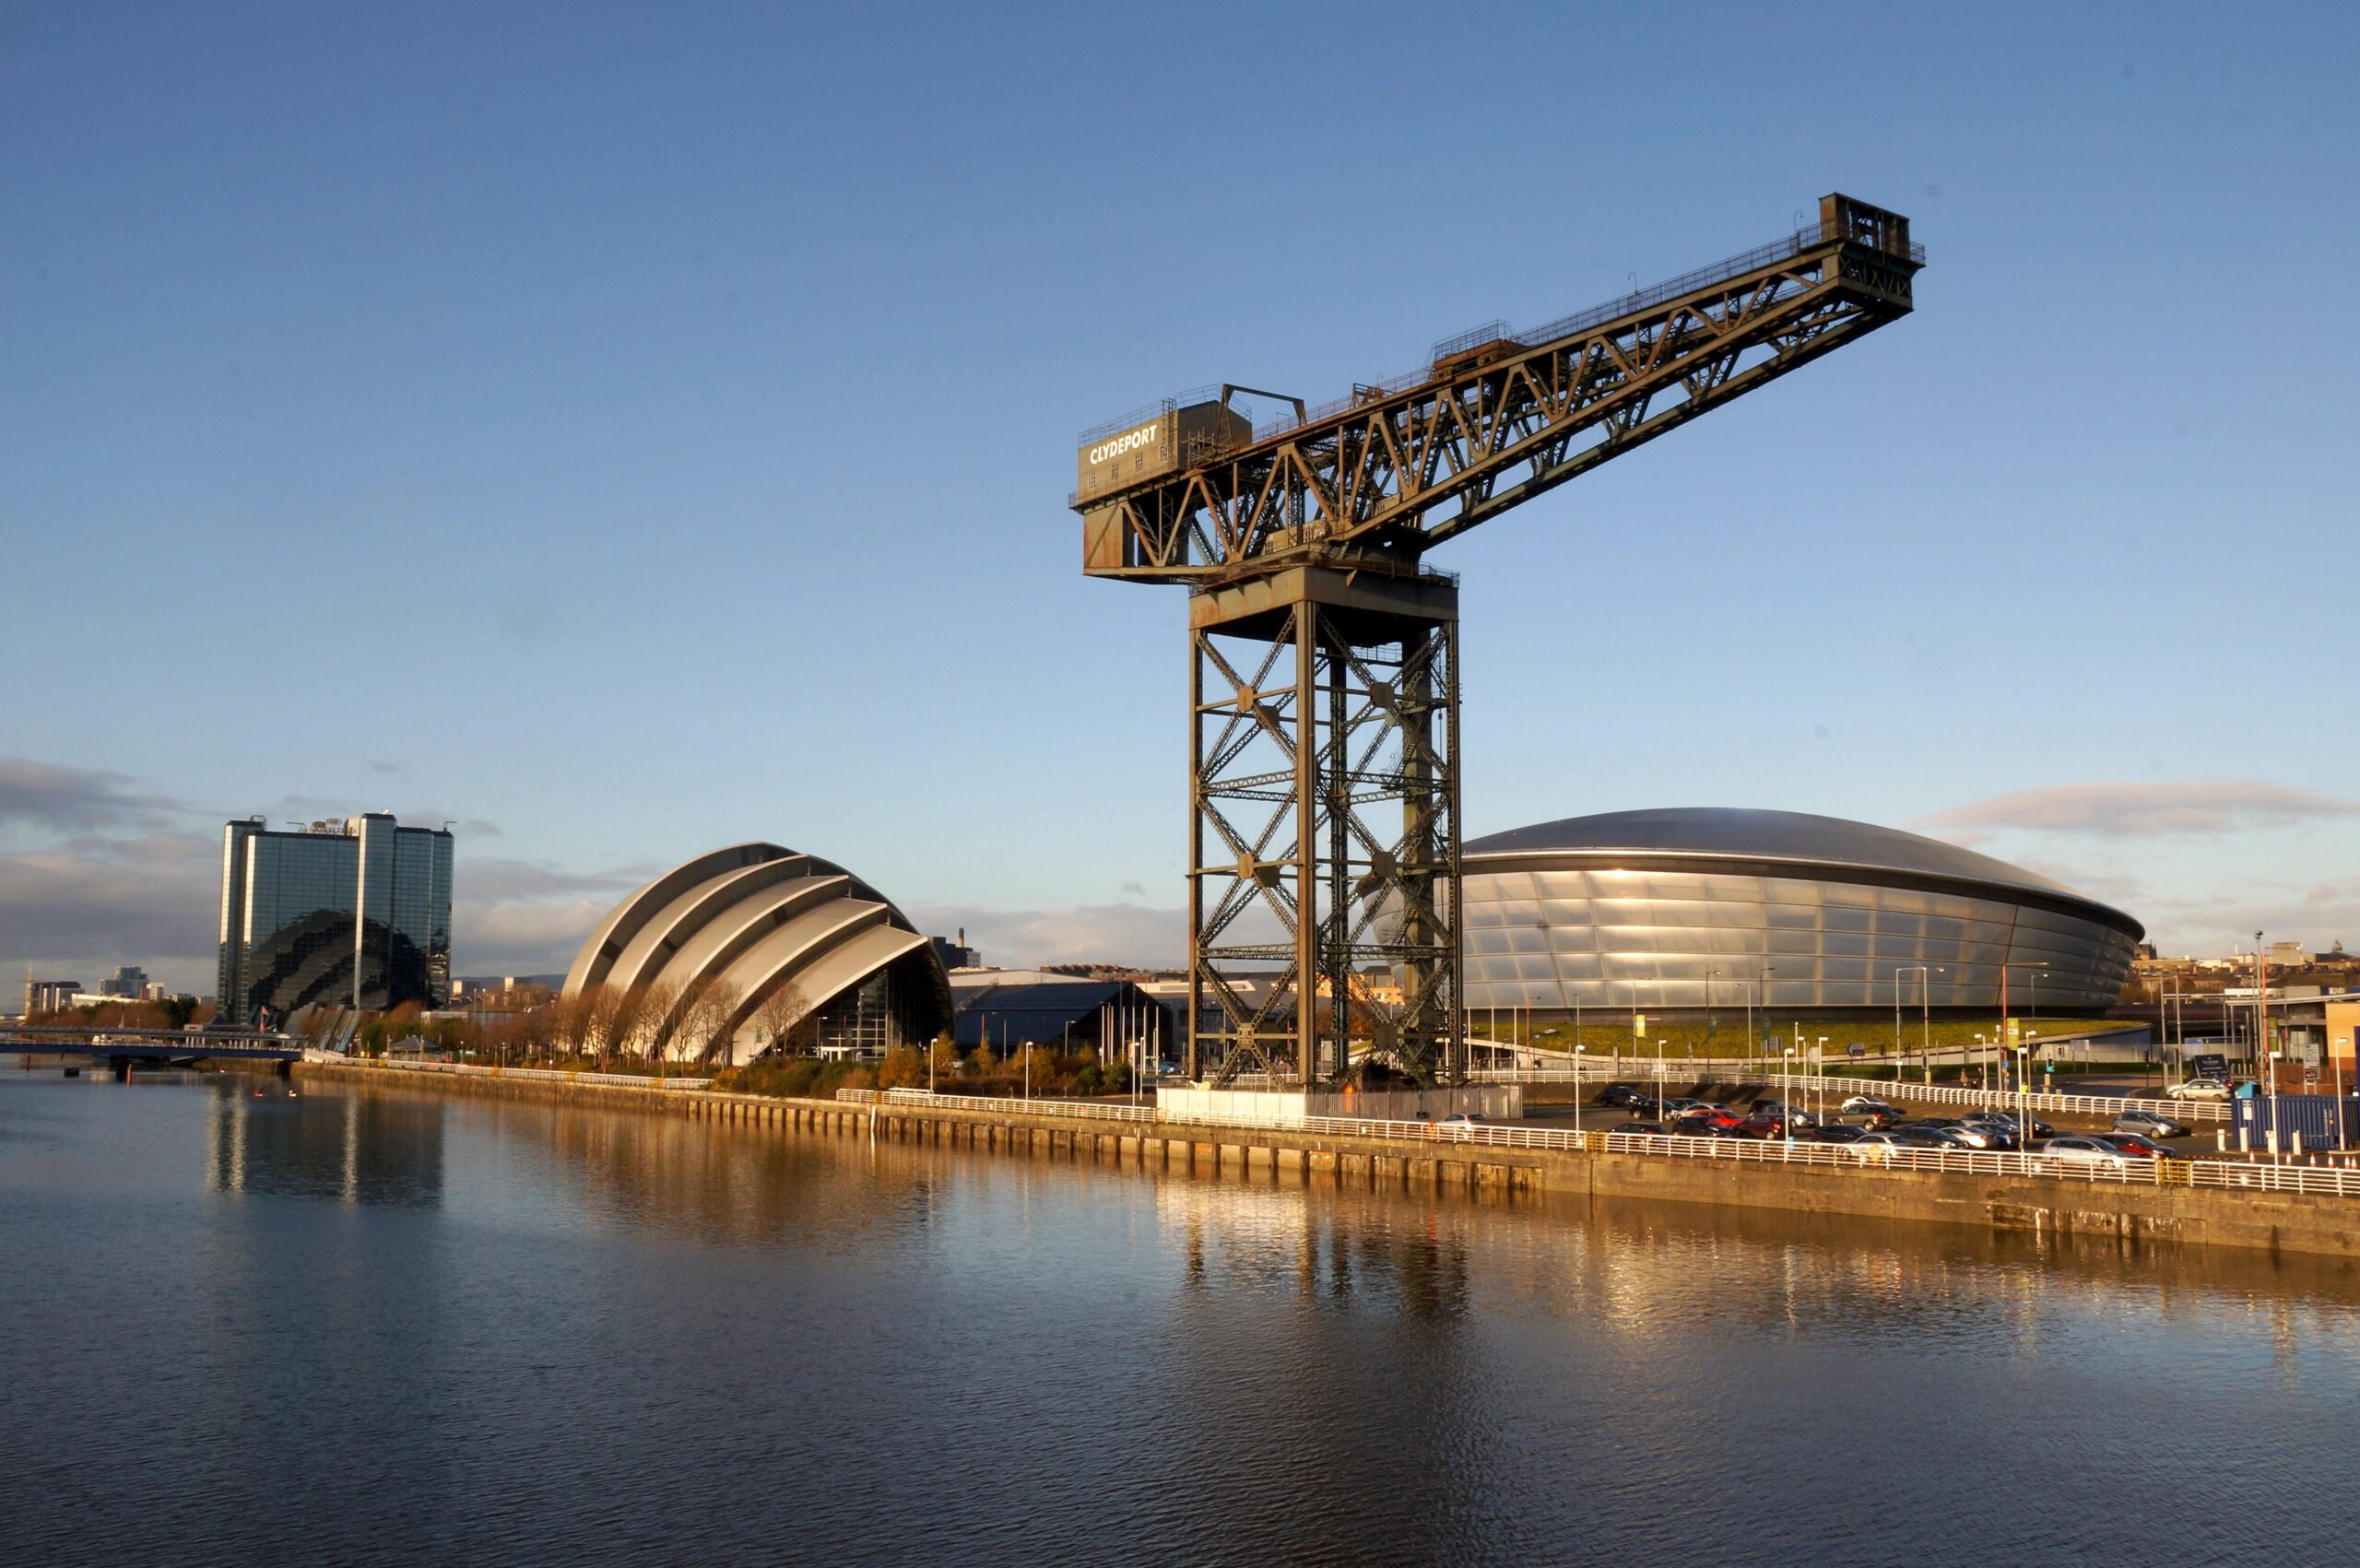 FCDO to swap East Kilbride for Glasgow to widen recruitment options